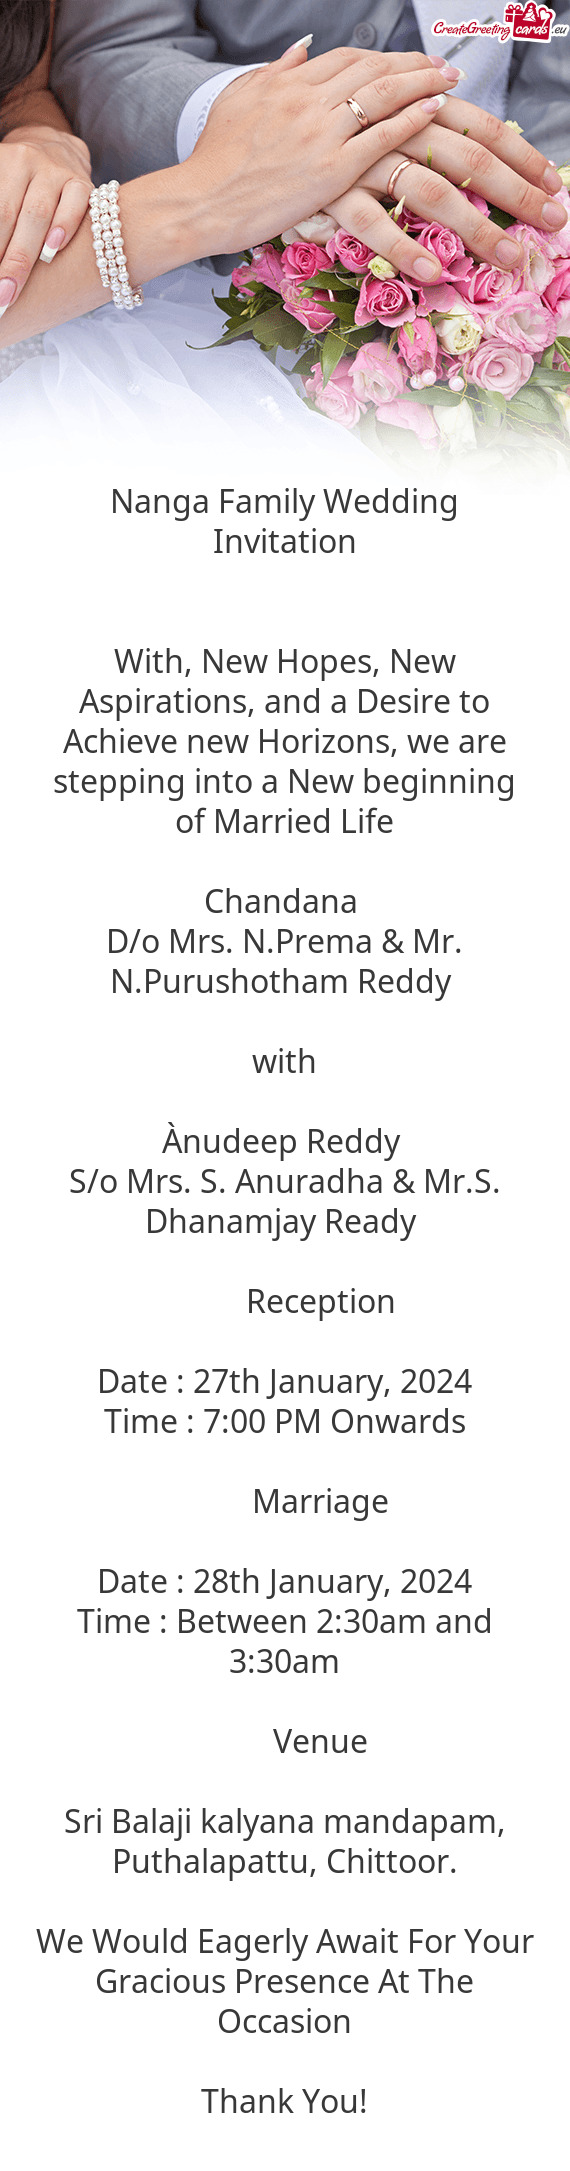 Nanga Family Wedding Invitation